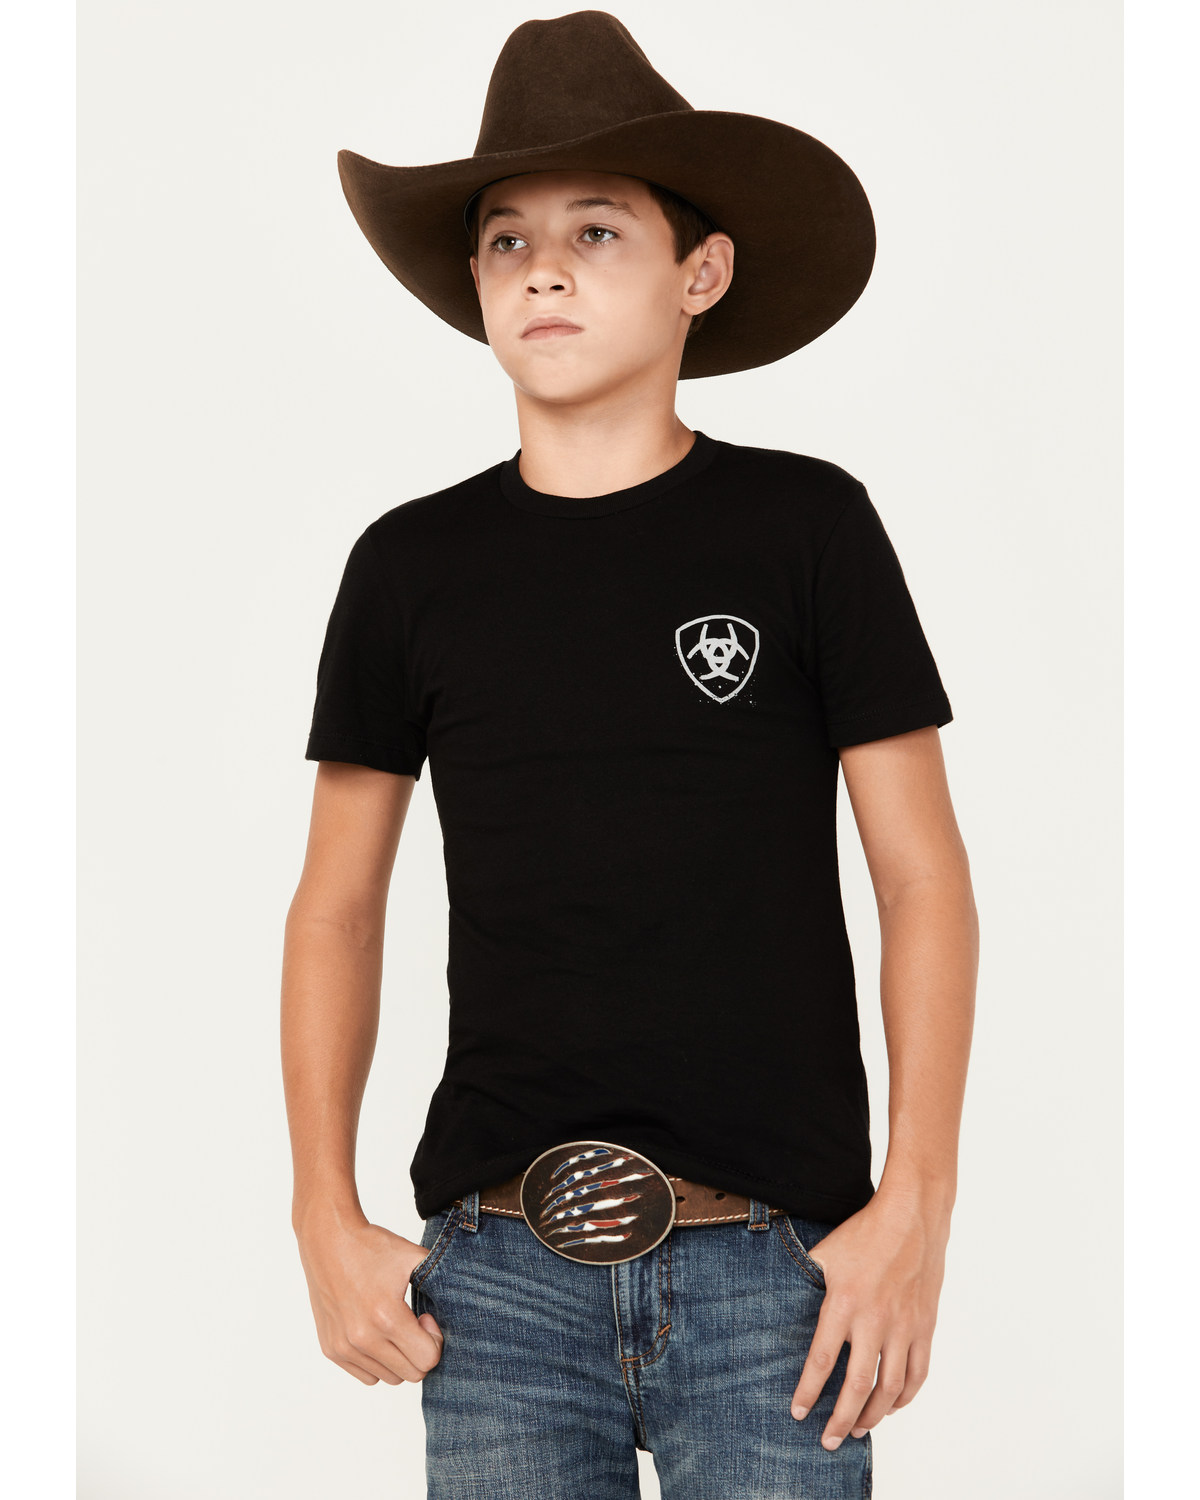 Ariat Boys' Cactus Flag Short Sleeve Graphic T-Shirt